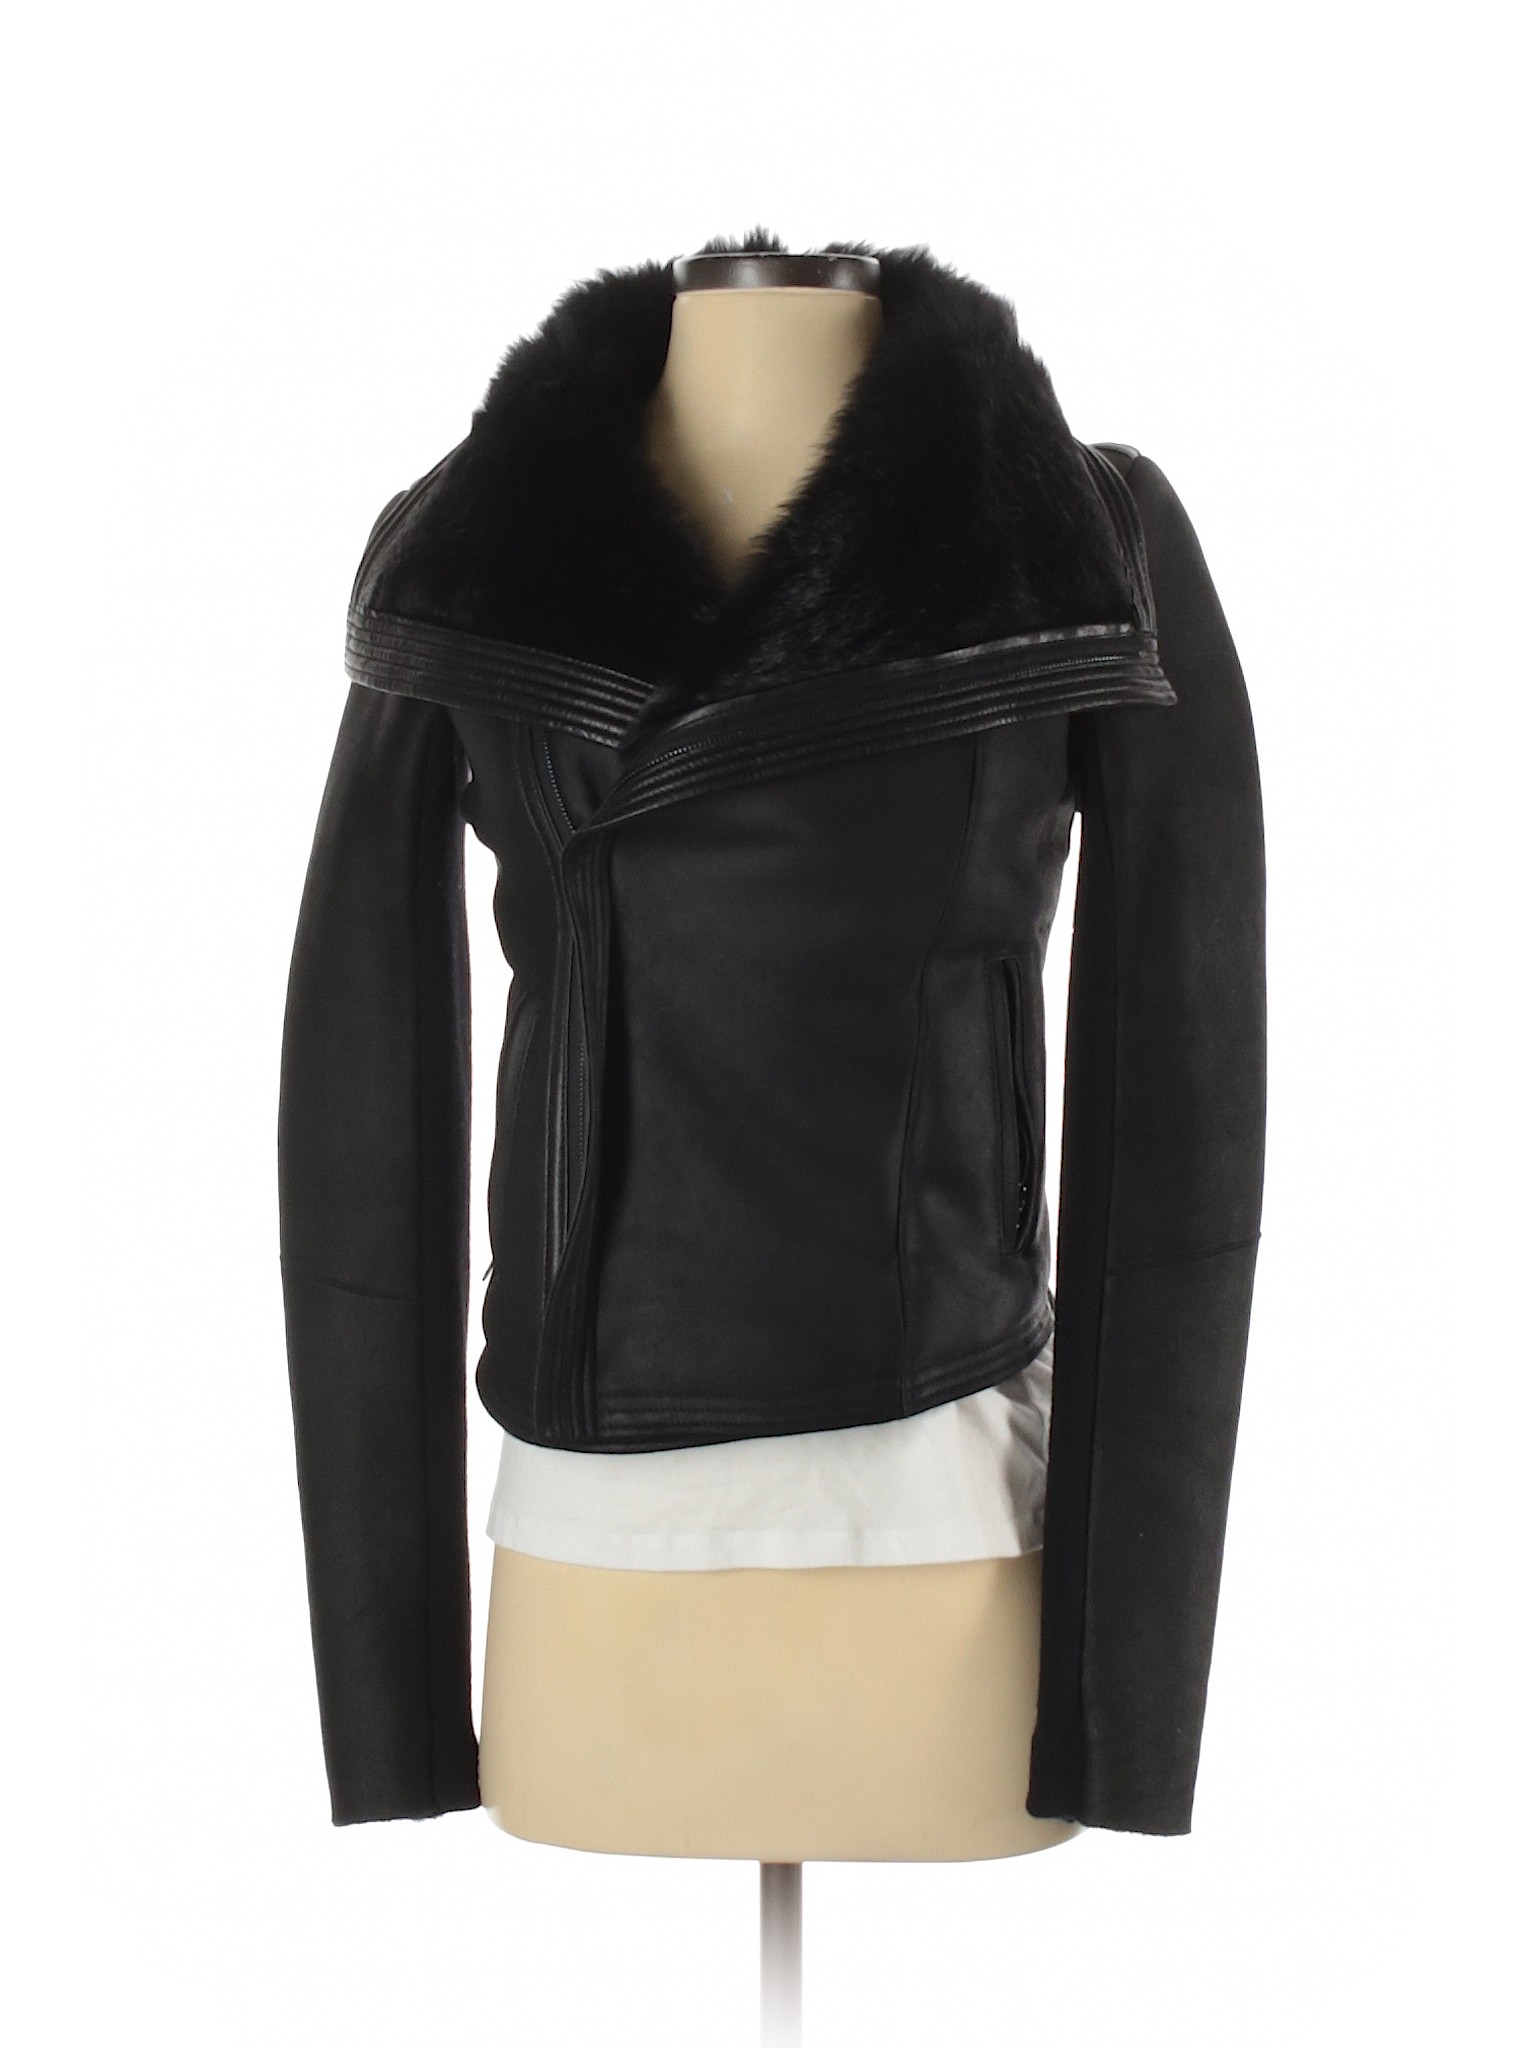 Vince. Women Black Leather Jacket S | eBay